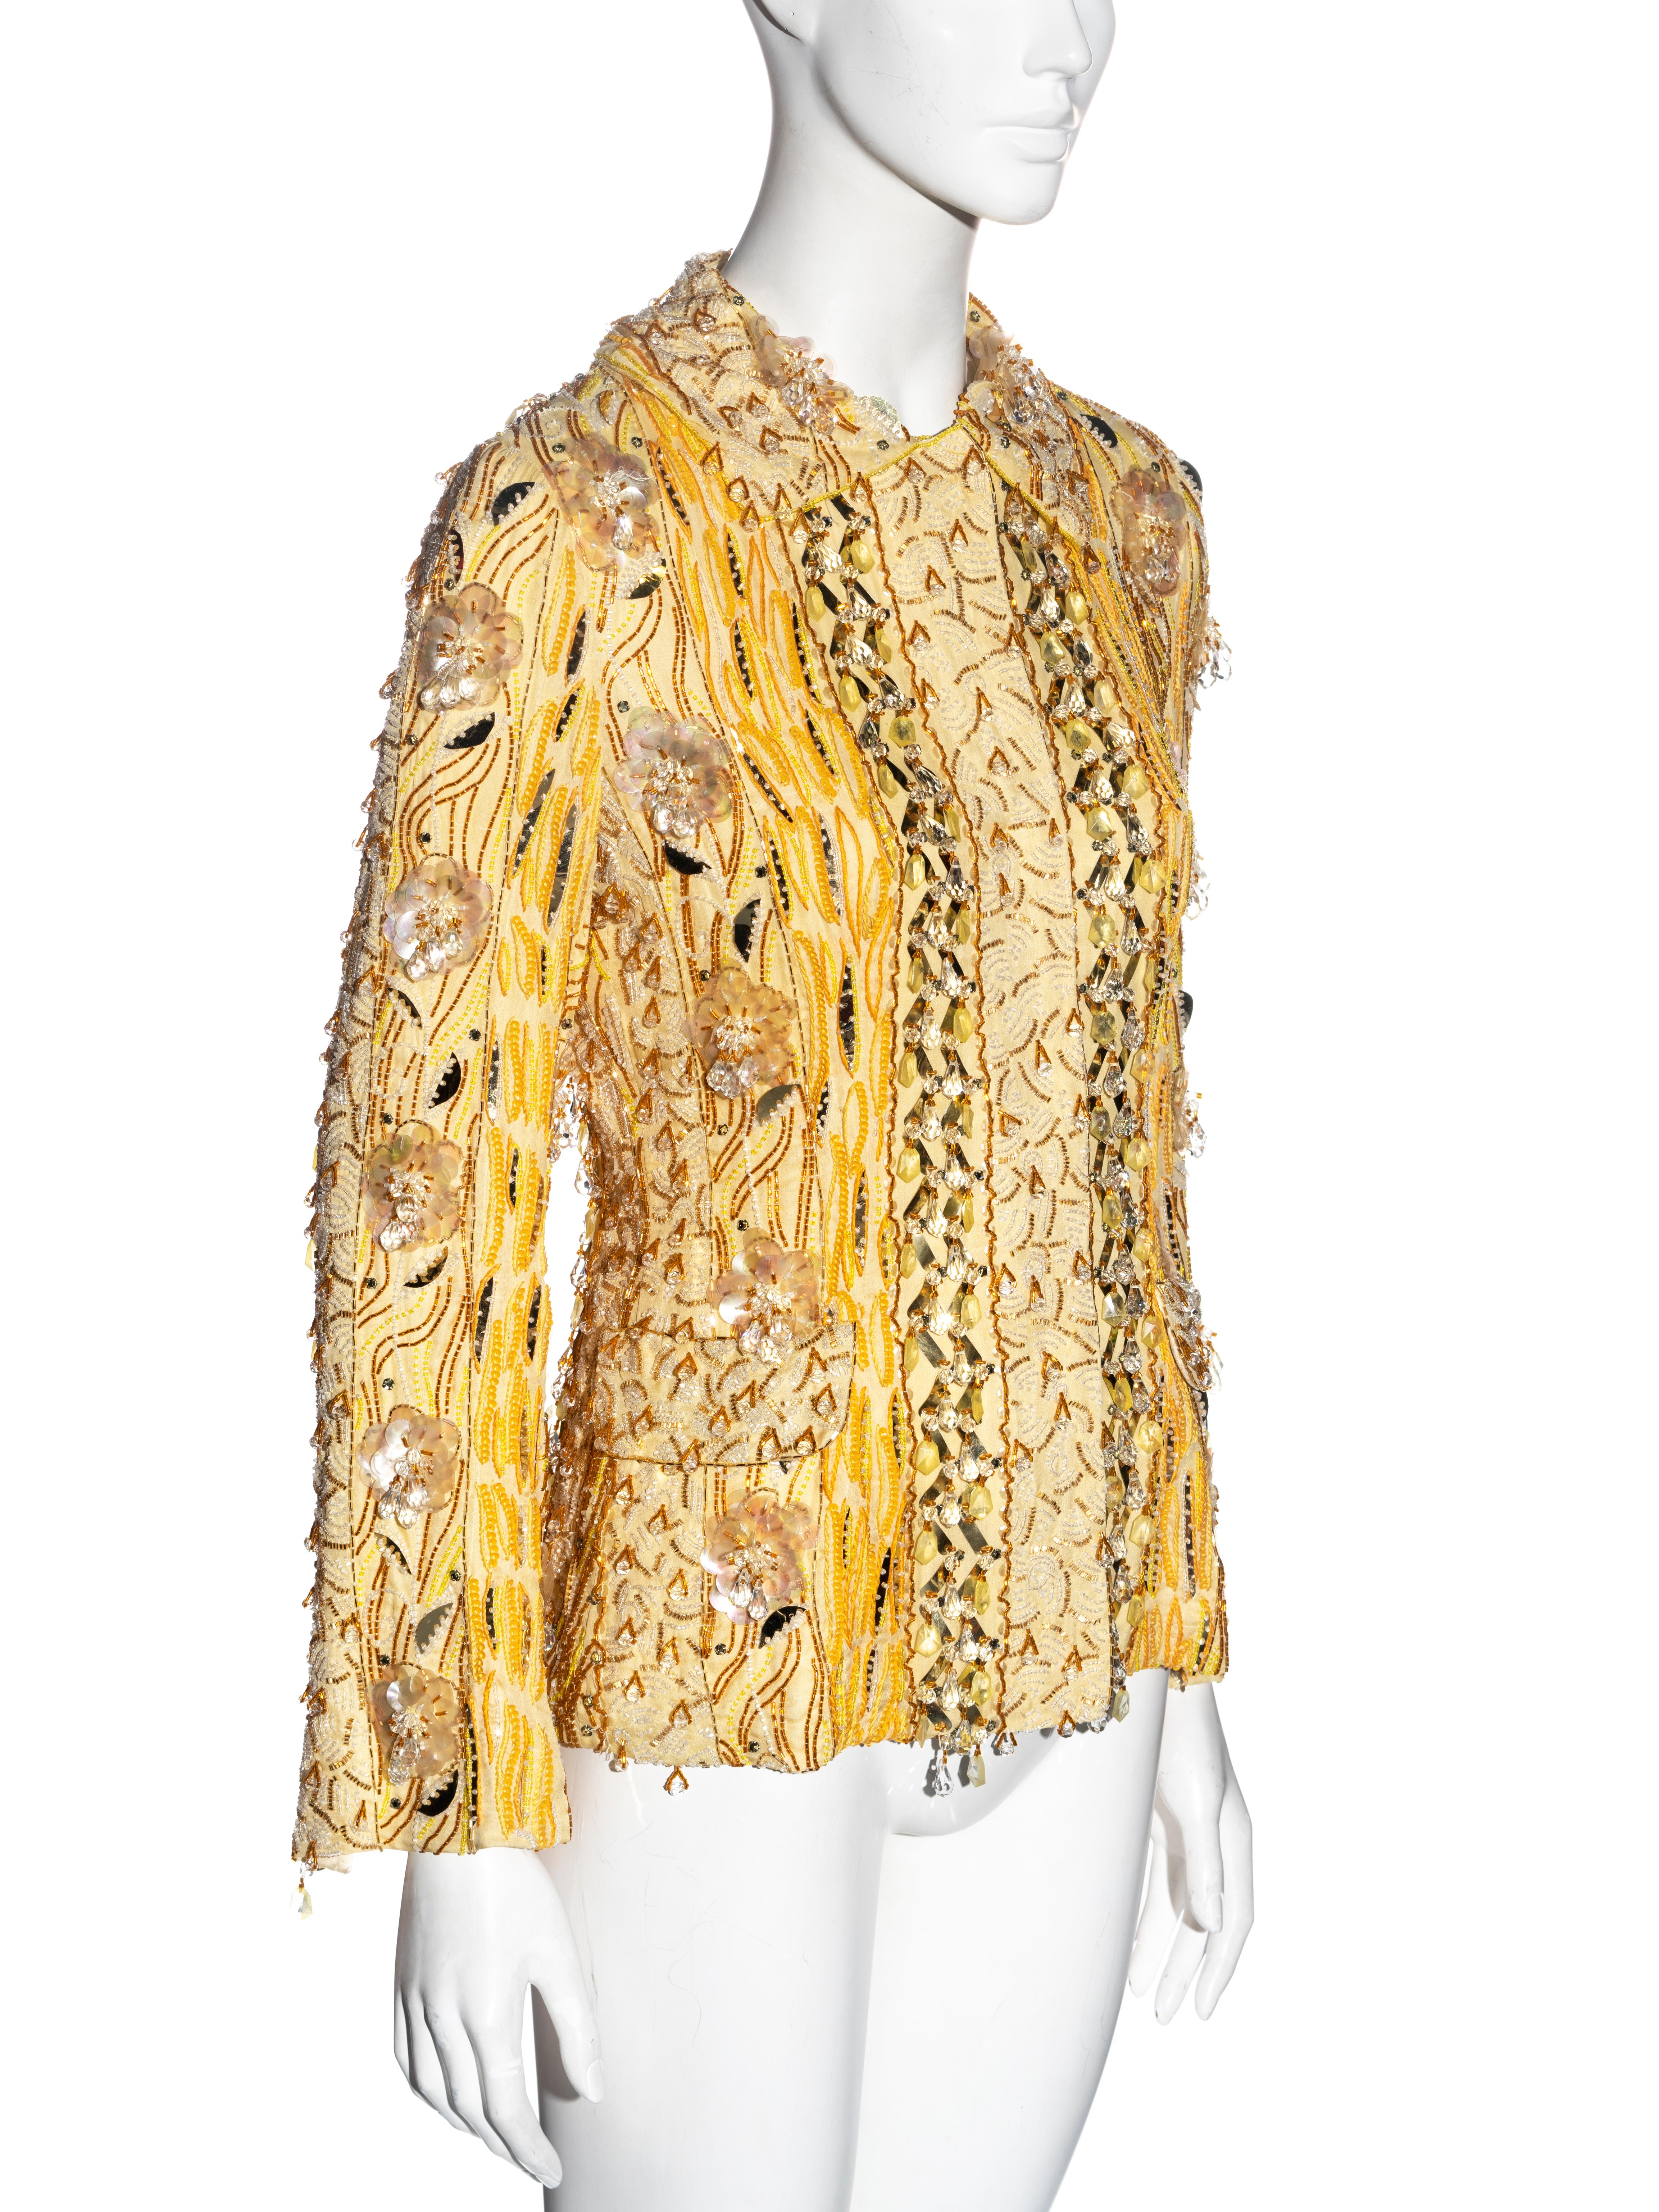 Dolce & Gabbana yellow heavily embellished silk evening jacket, ss 2004 2